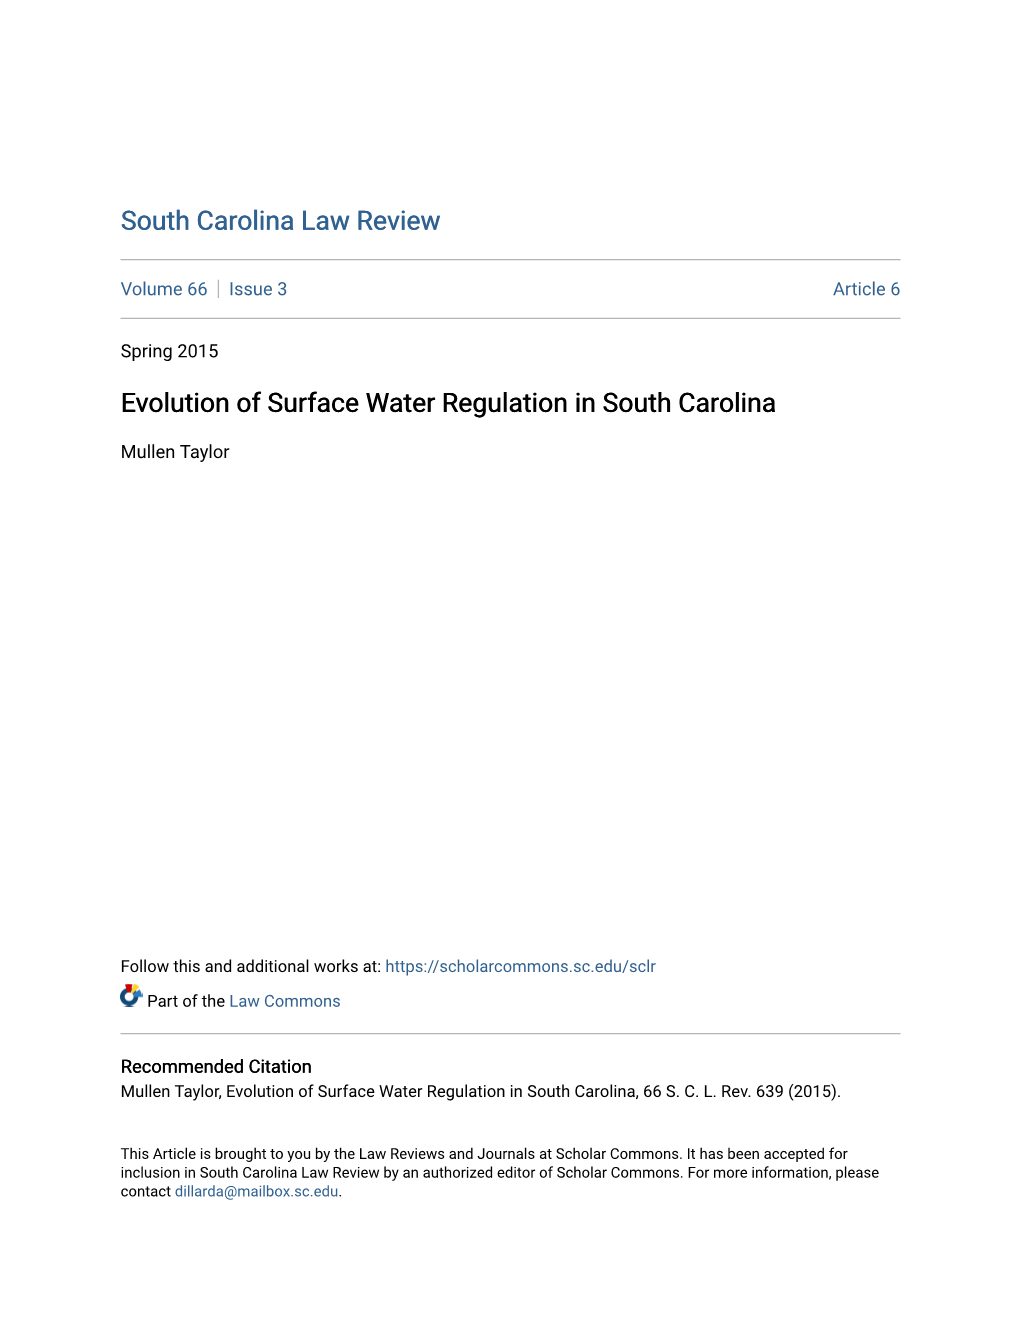 Evolution of Surface Water Regulation in South Carolina